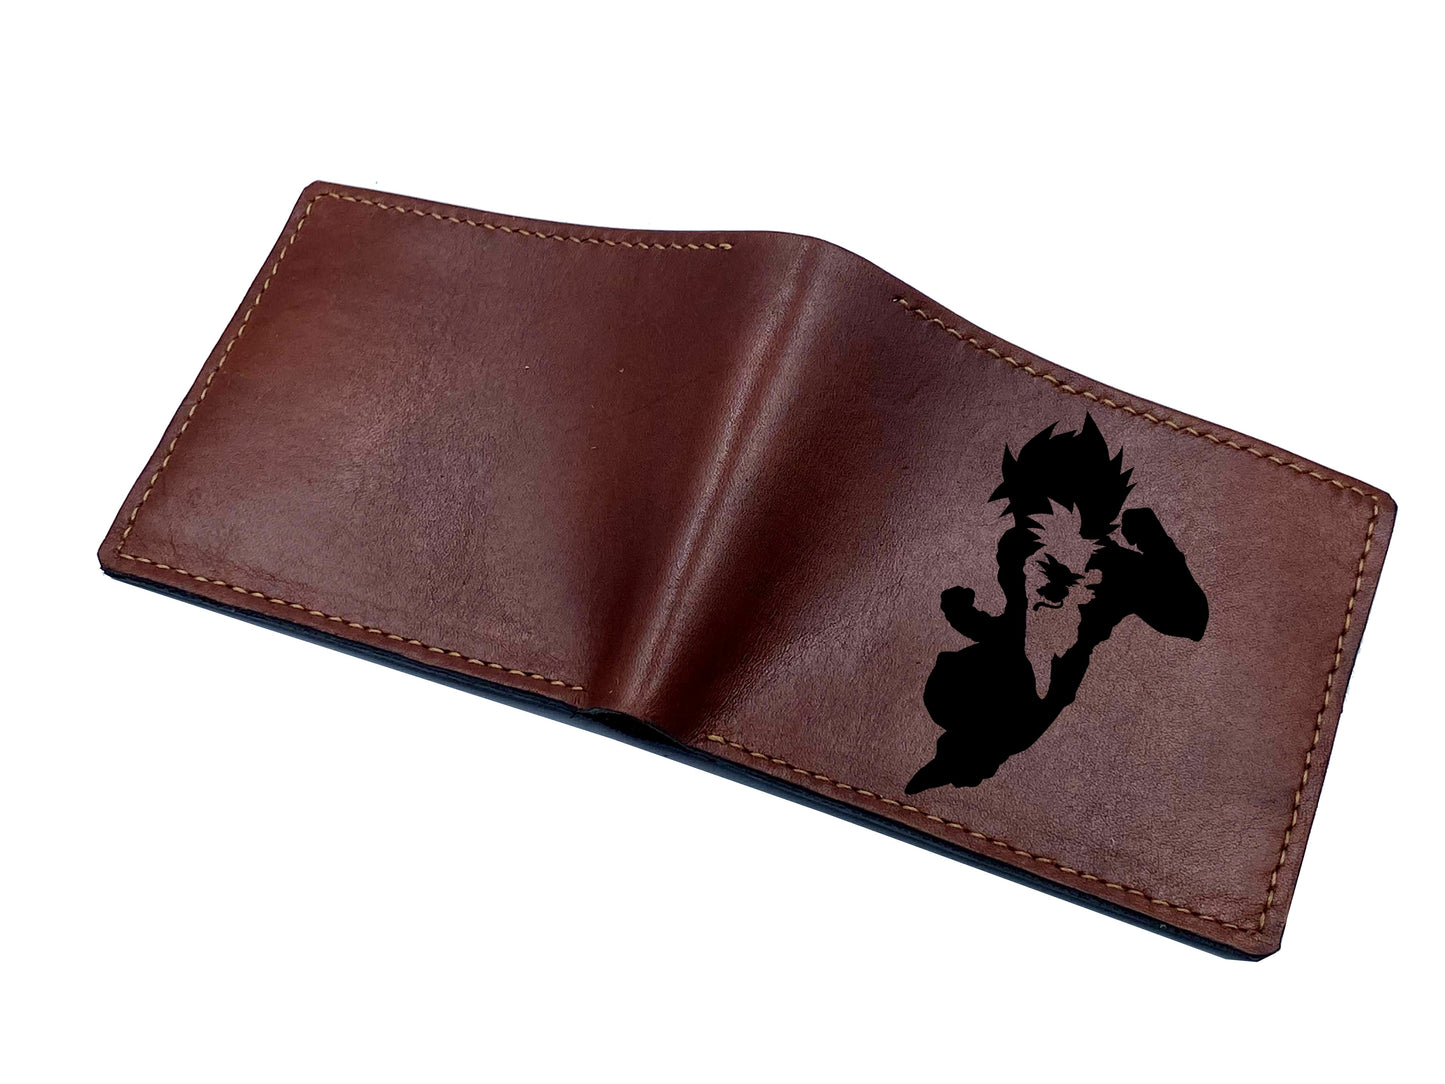 Mayan Corner - Super saiyan transform art, custom leather men wallet, son goku dragon ball wallet, leather gift for him, anime characters present